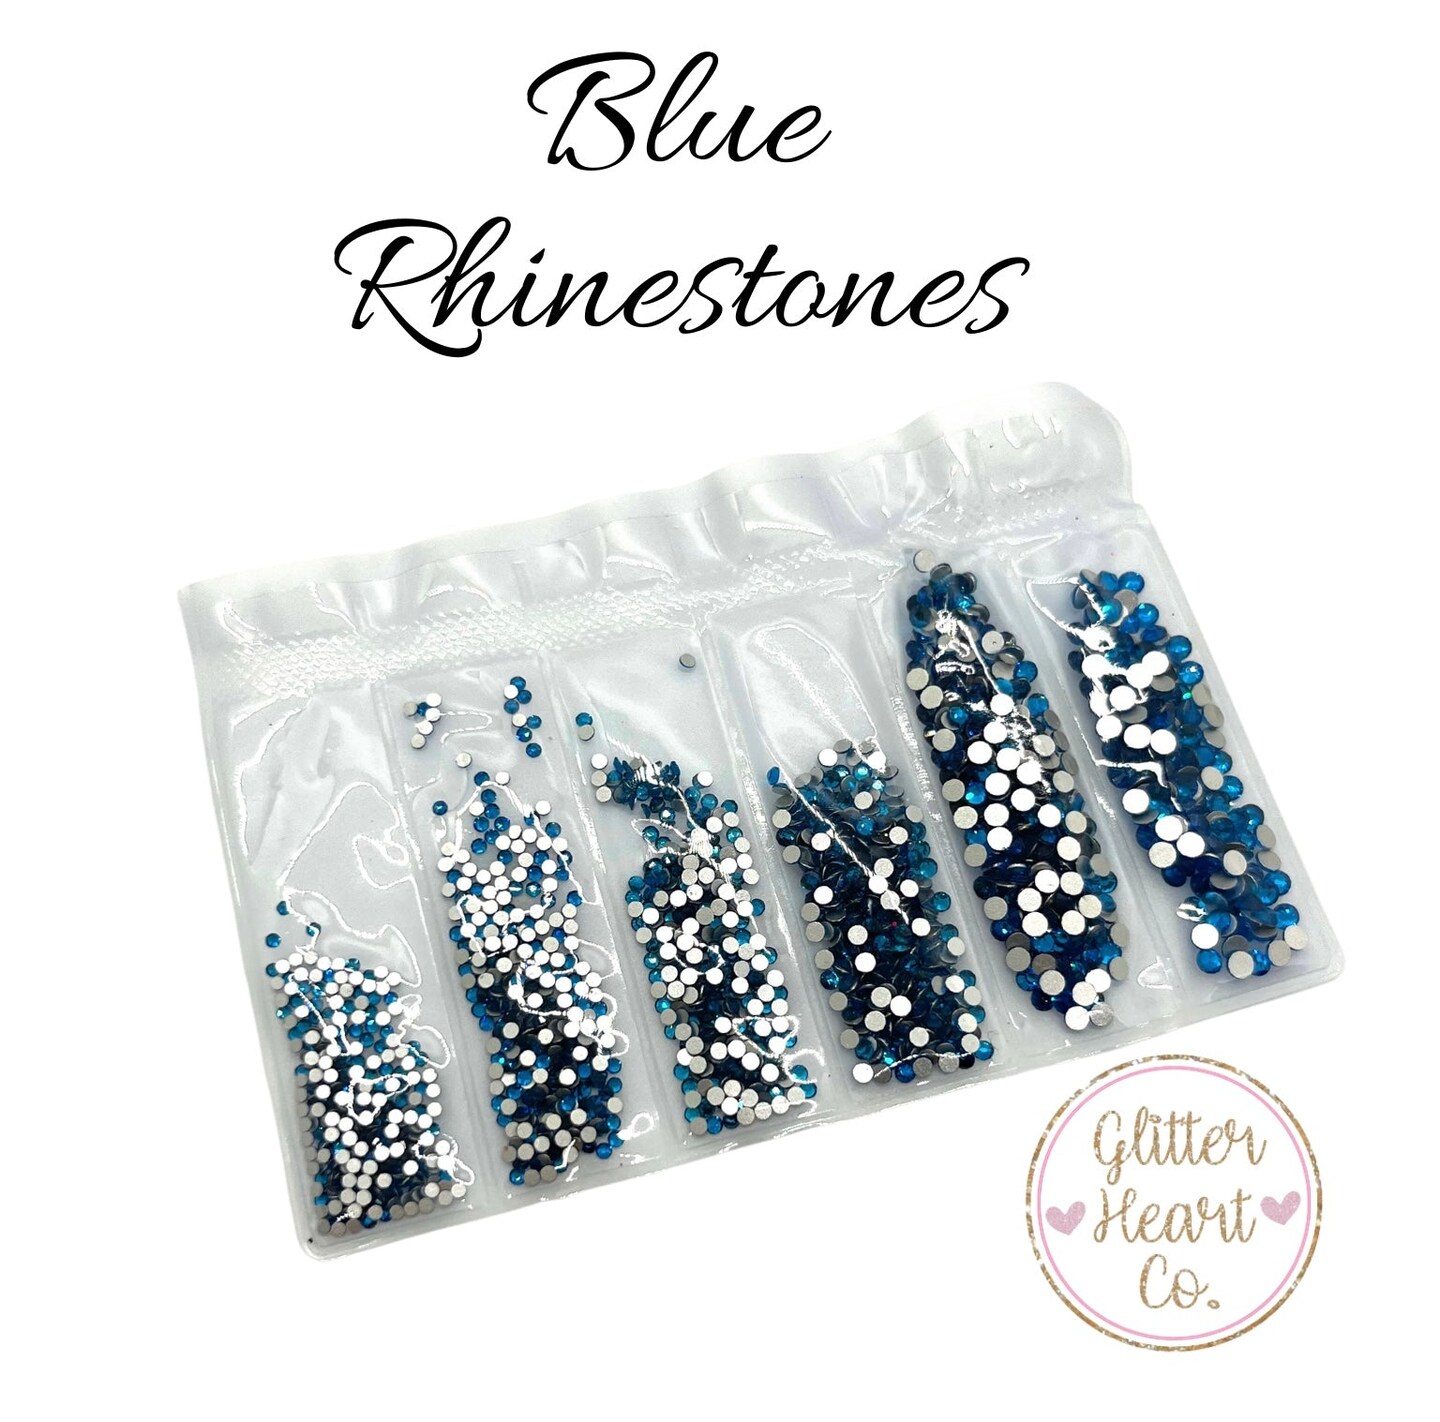 Blue Rainbow Glass Rhinestones by Glitter Heart Co.™